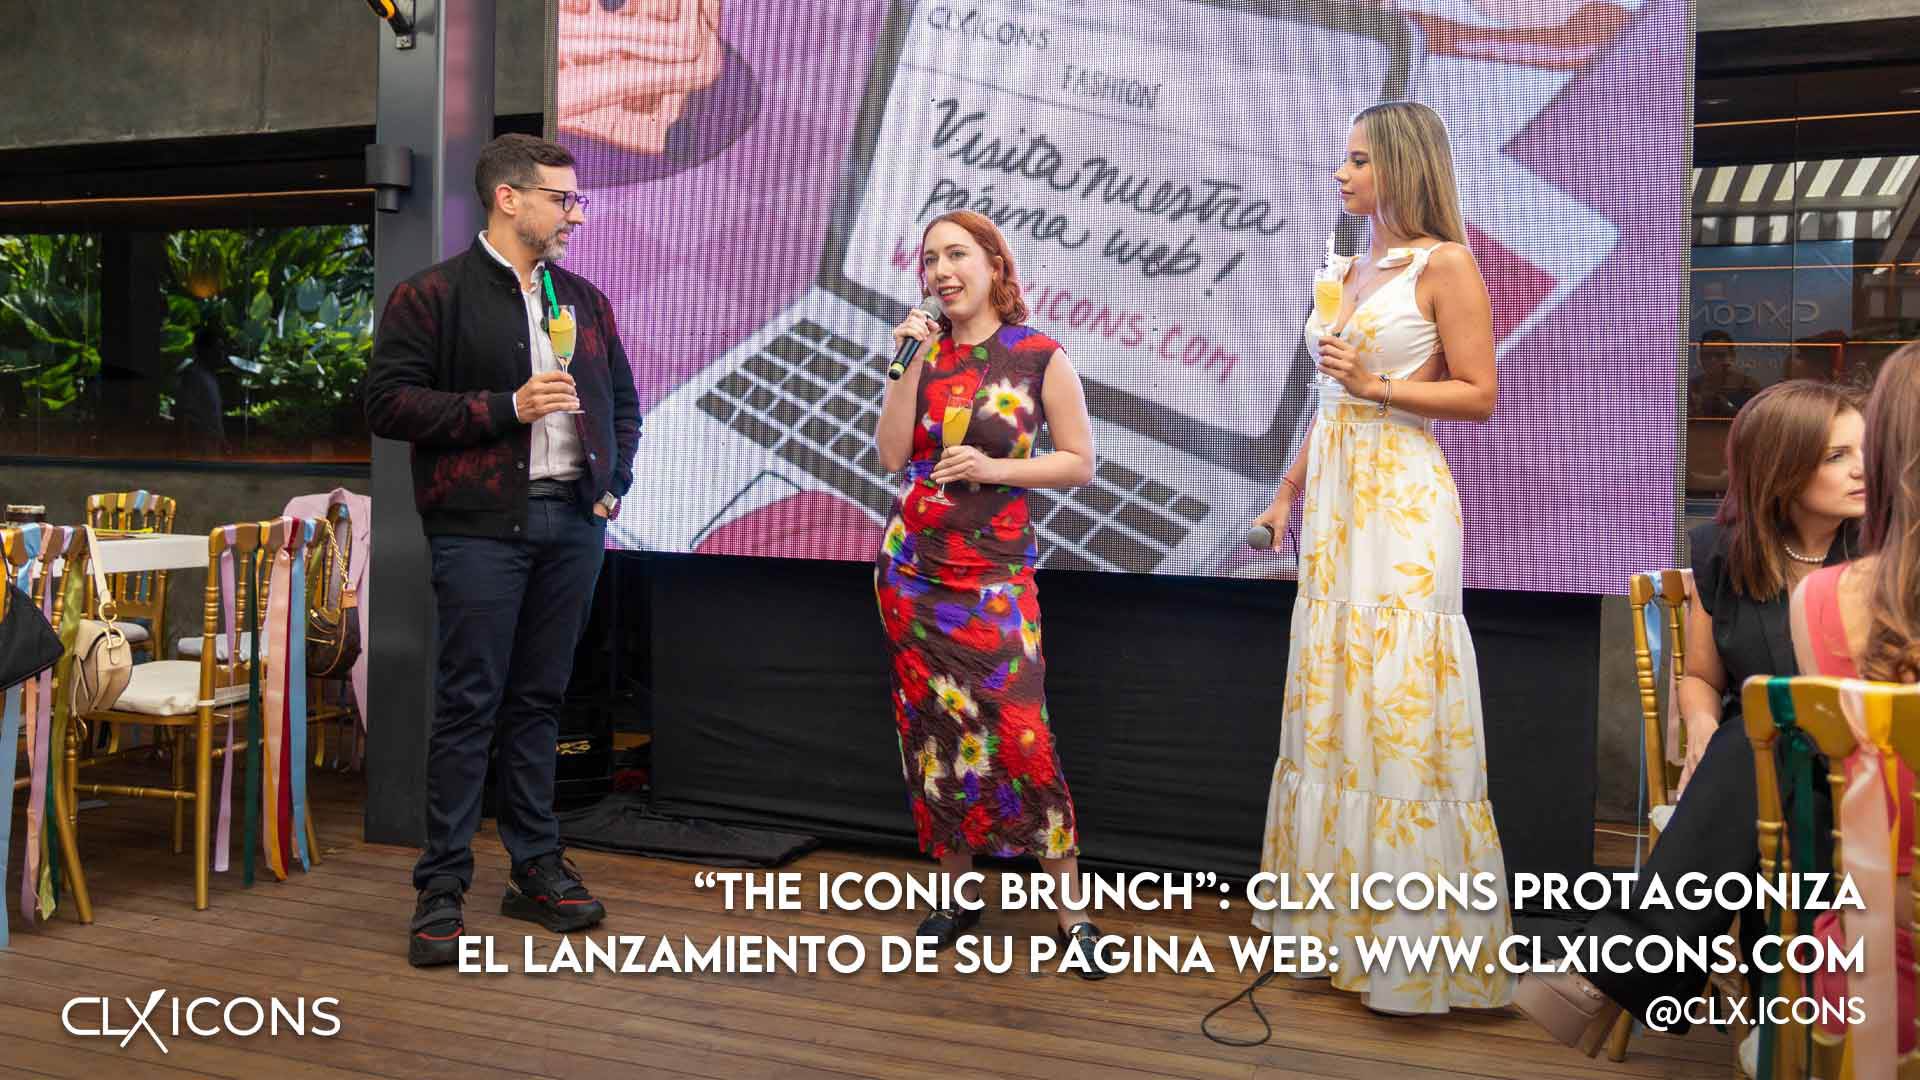 Página web CLX Icons - the iconic brunch